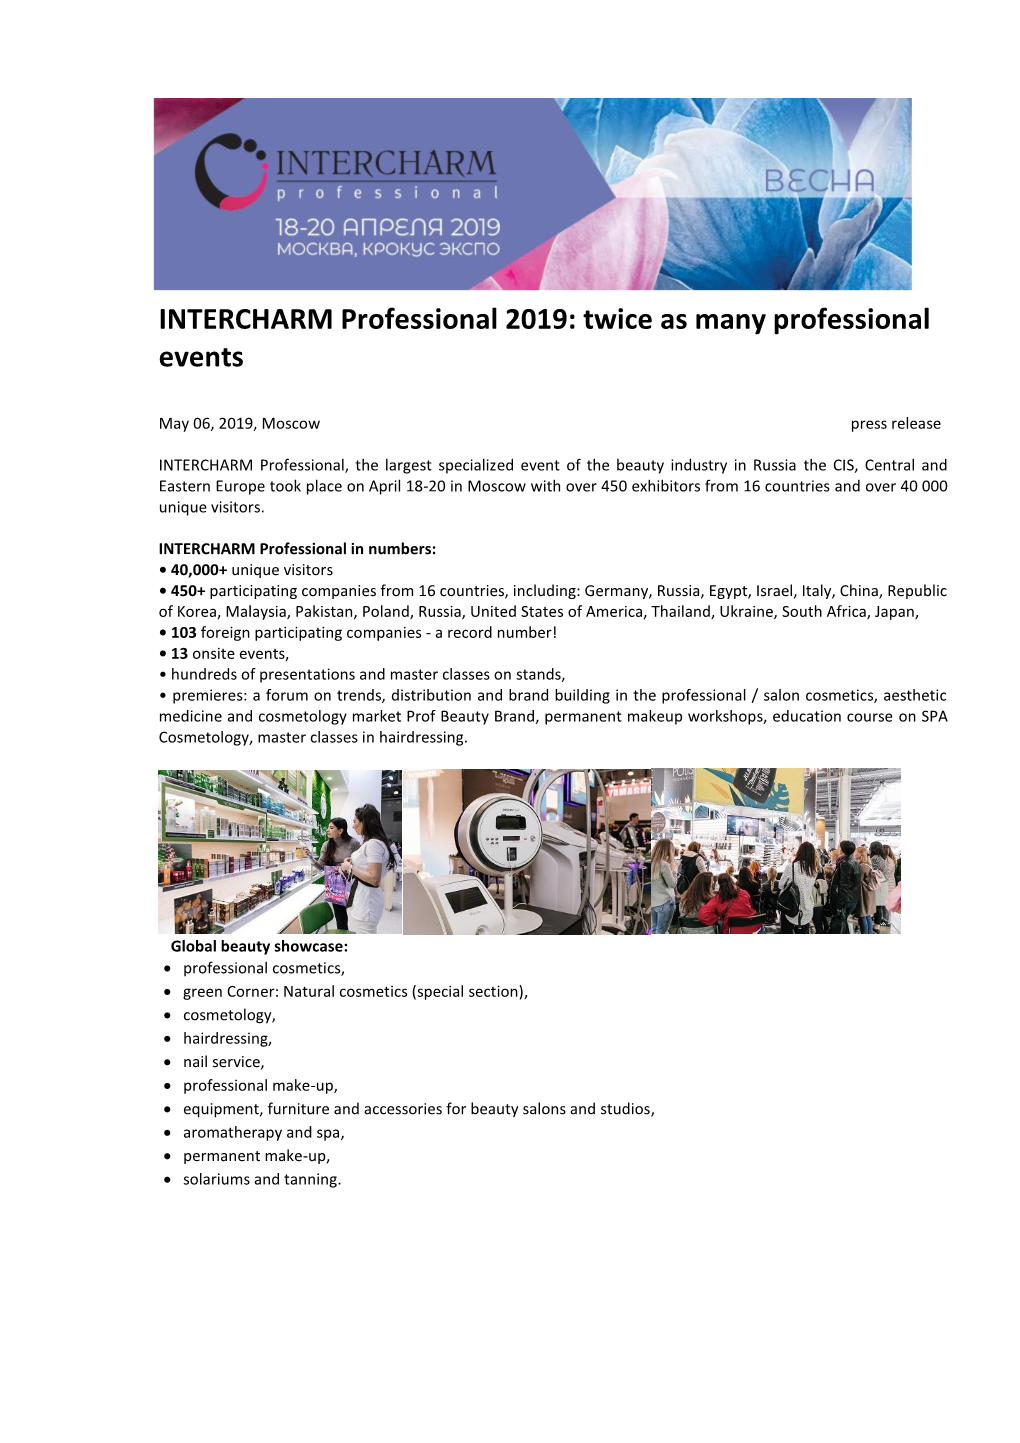 INTERCHARM Professional 2019 Results